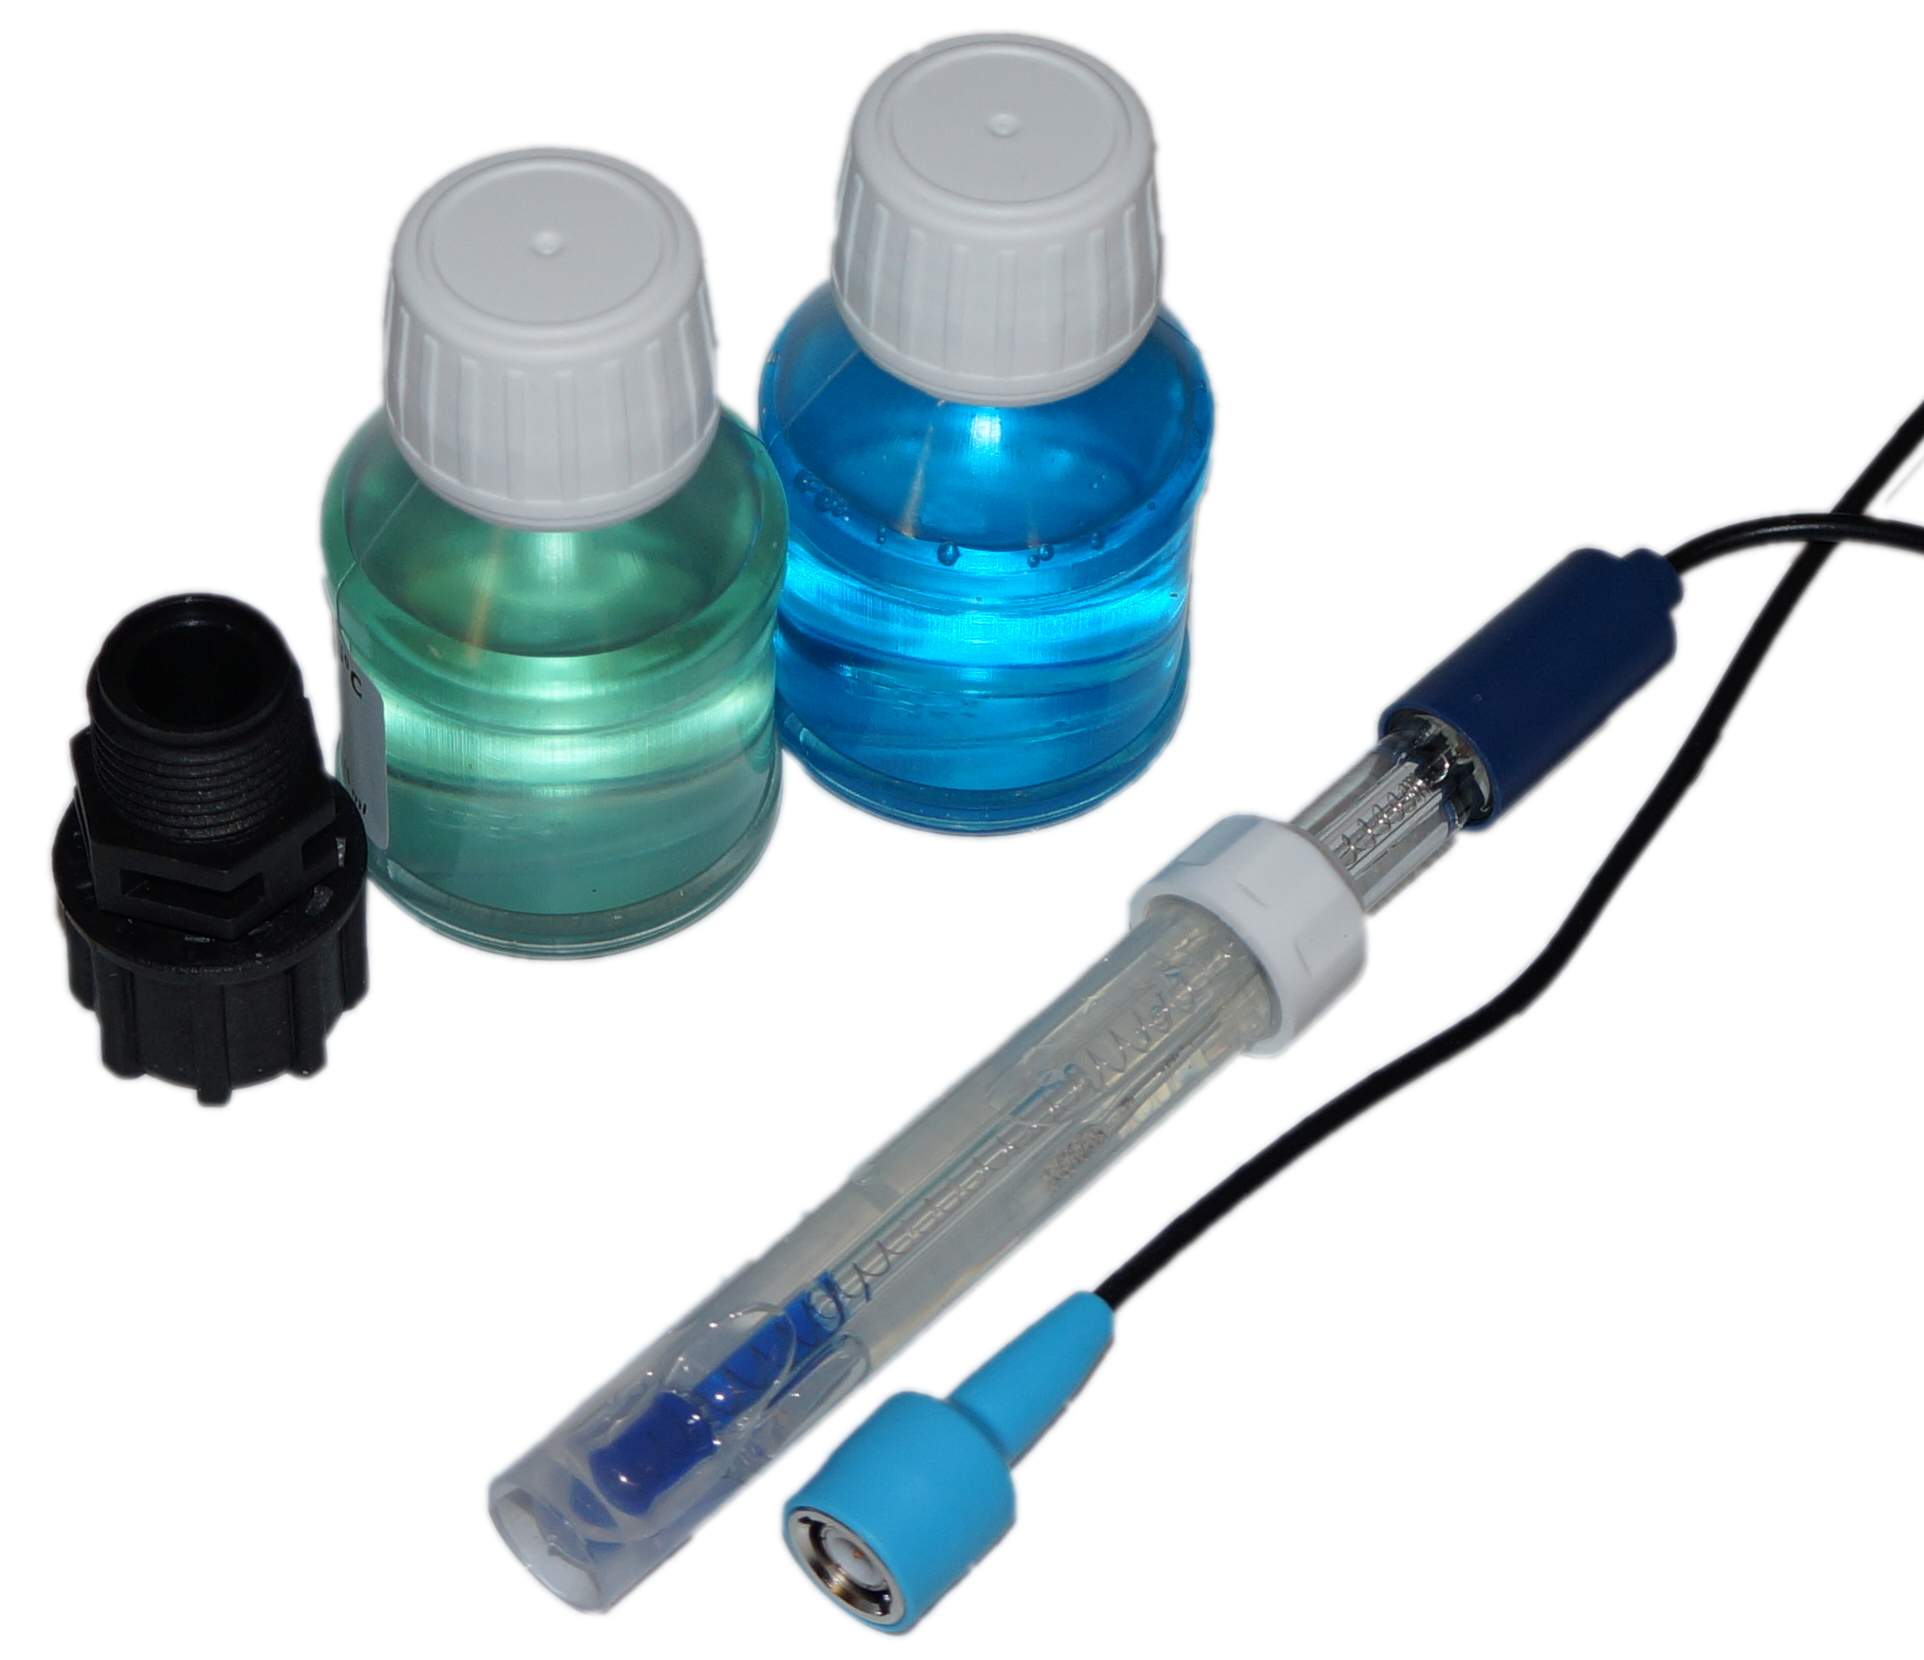 probe kit for Maxi Pro plus PH glass solution